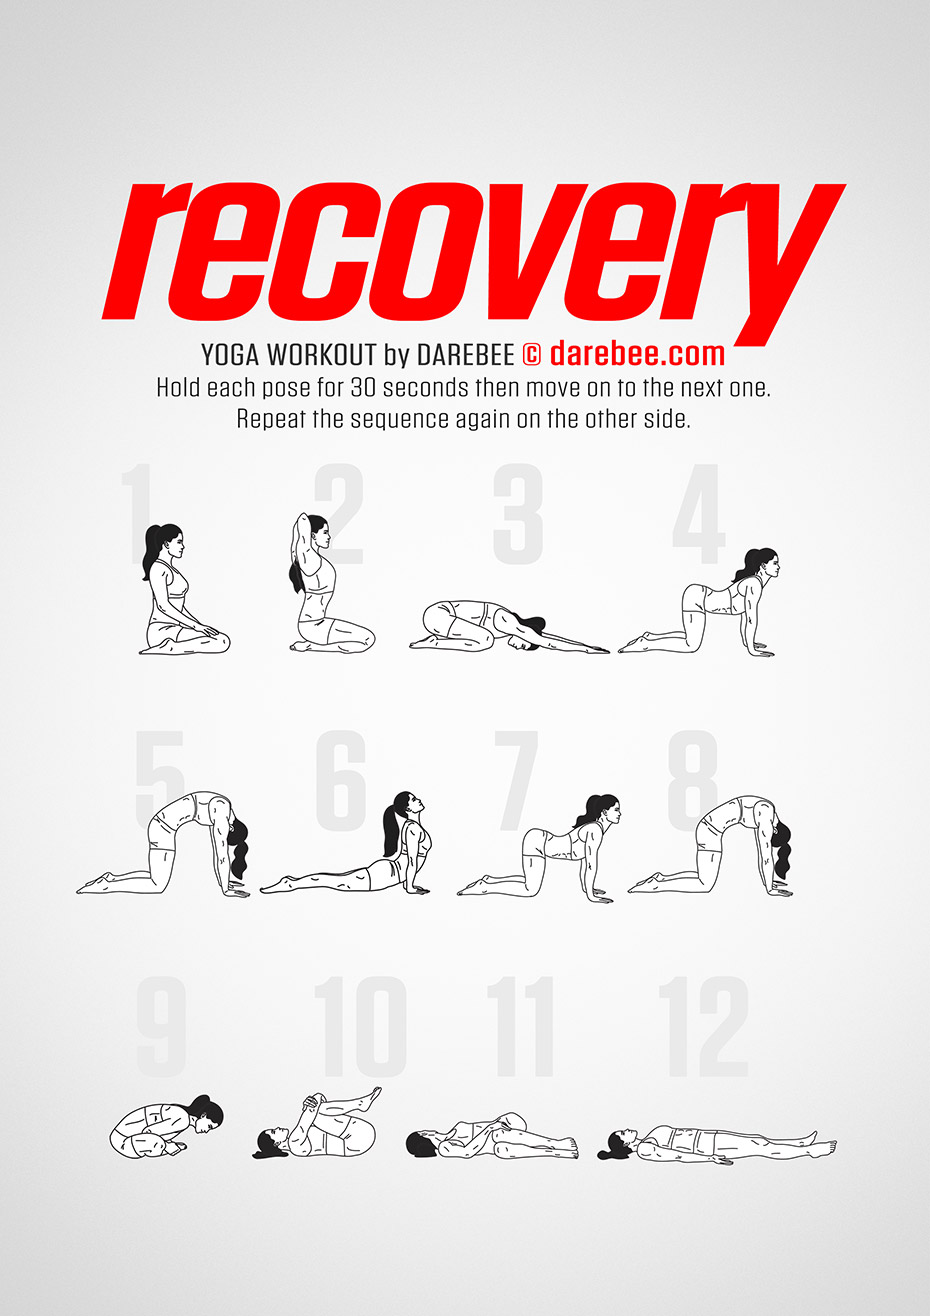 DAREBEE on X: NEW: Yoga for Runners  #darebee #yoga  #workout #fitness  / X